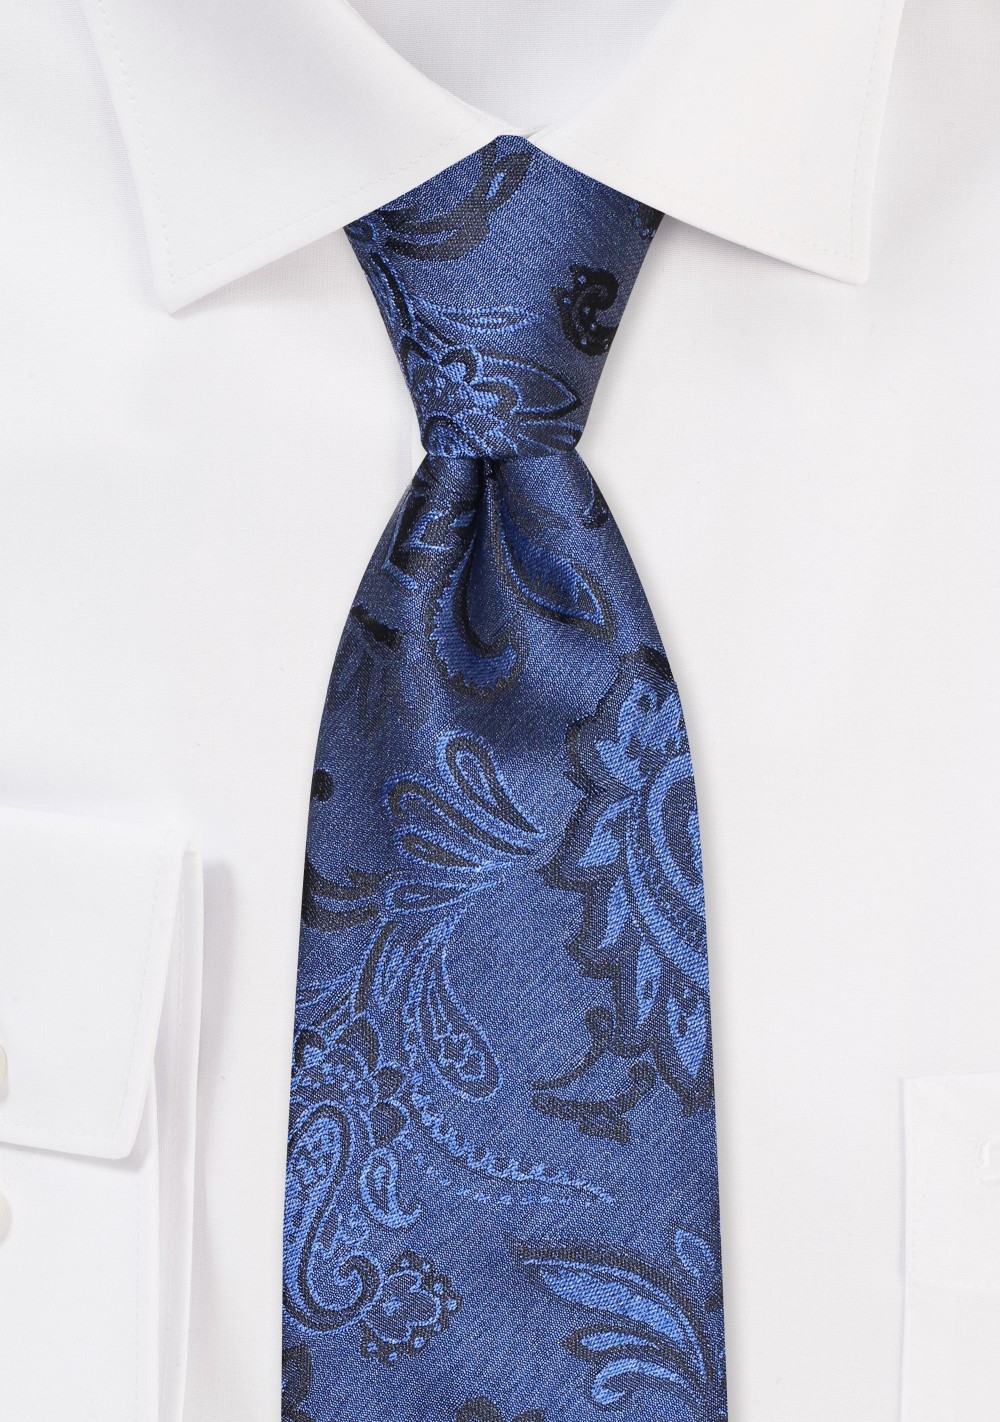 Slim Wool Textured Tie in Dark Navy Paisley Design